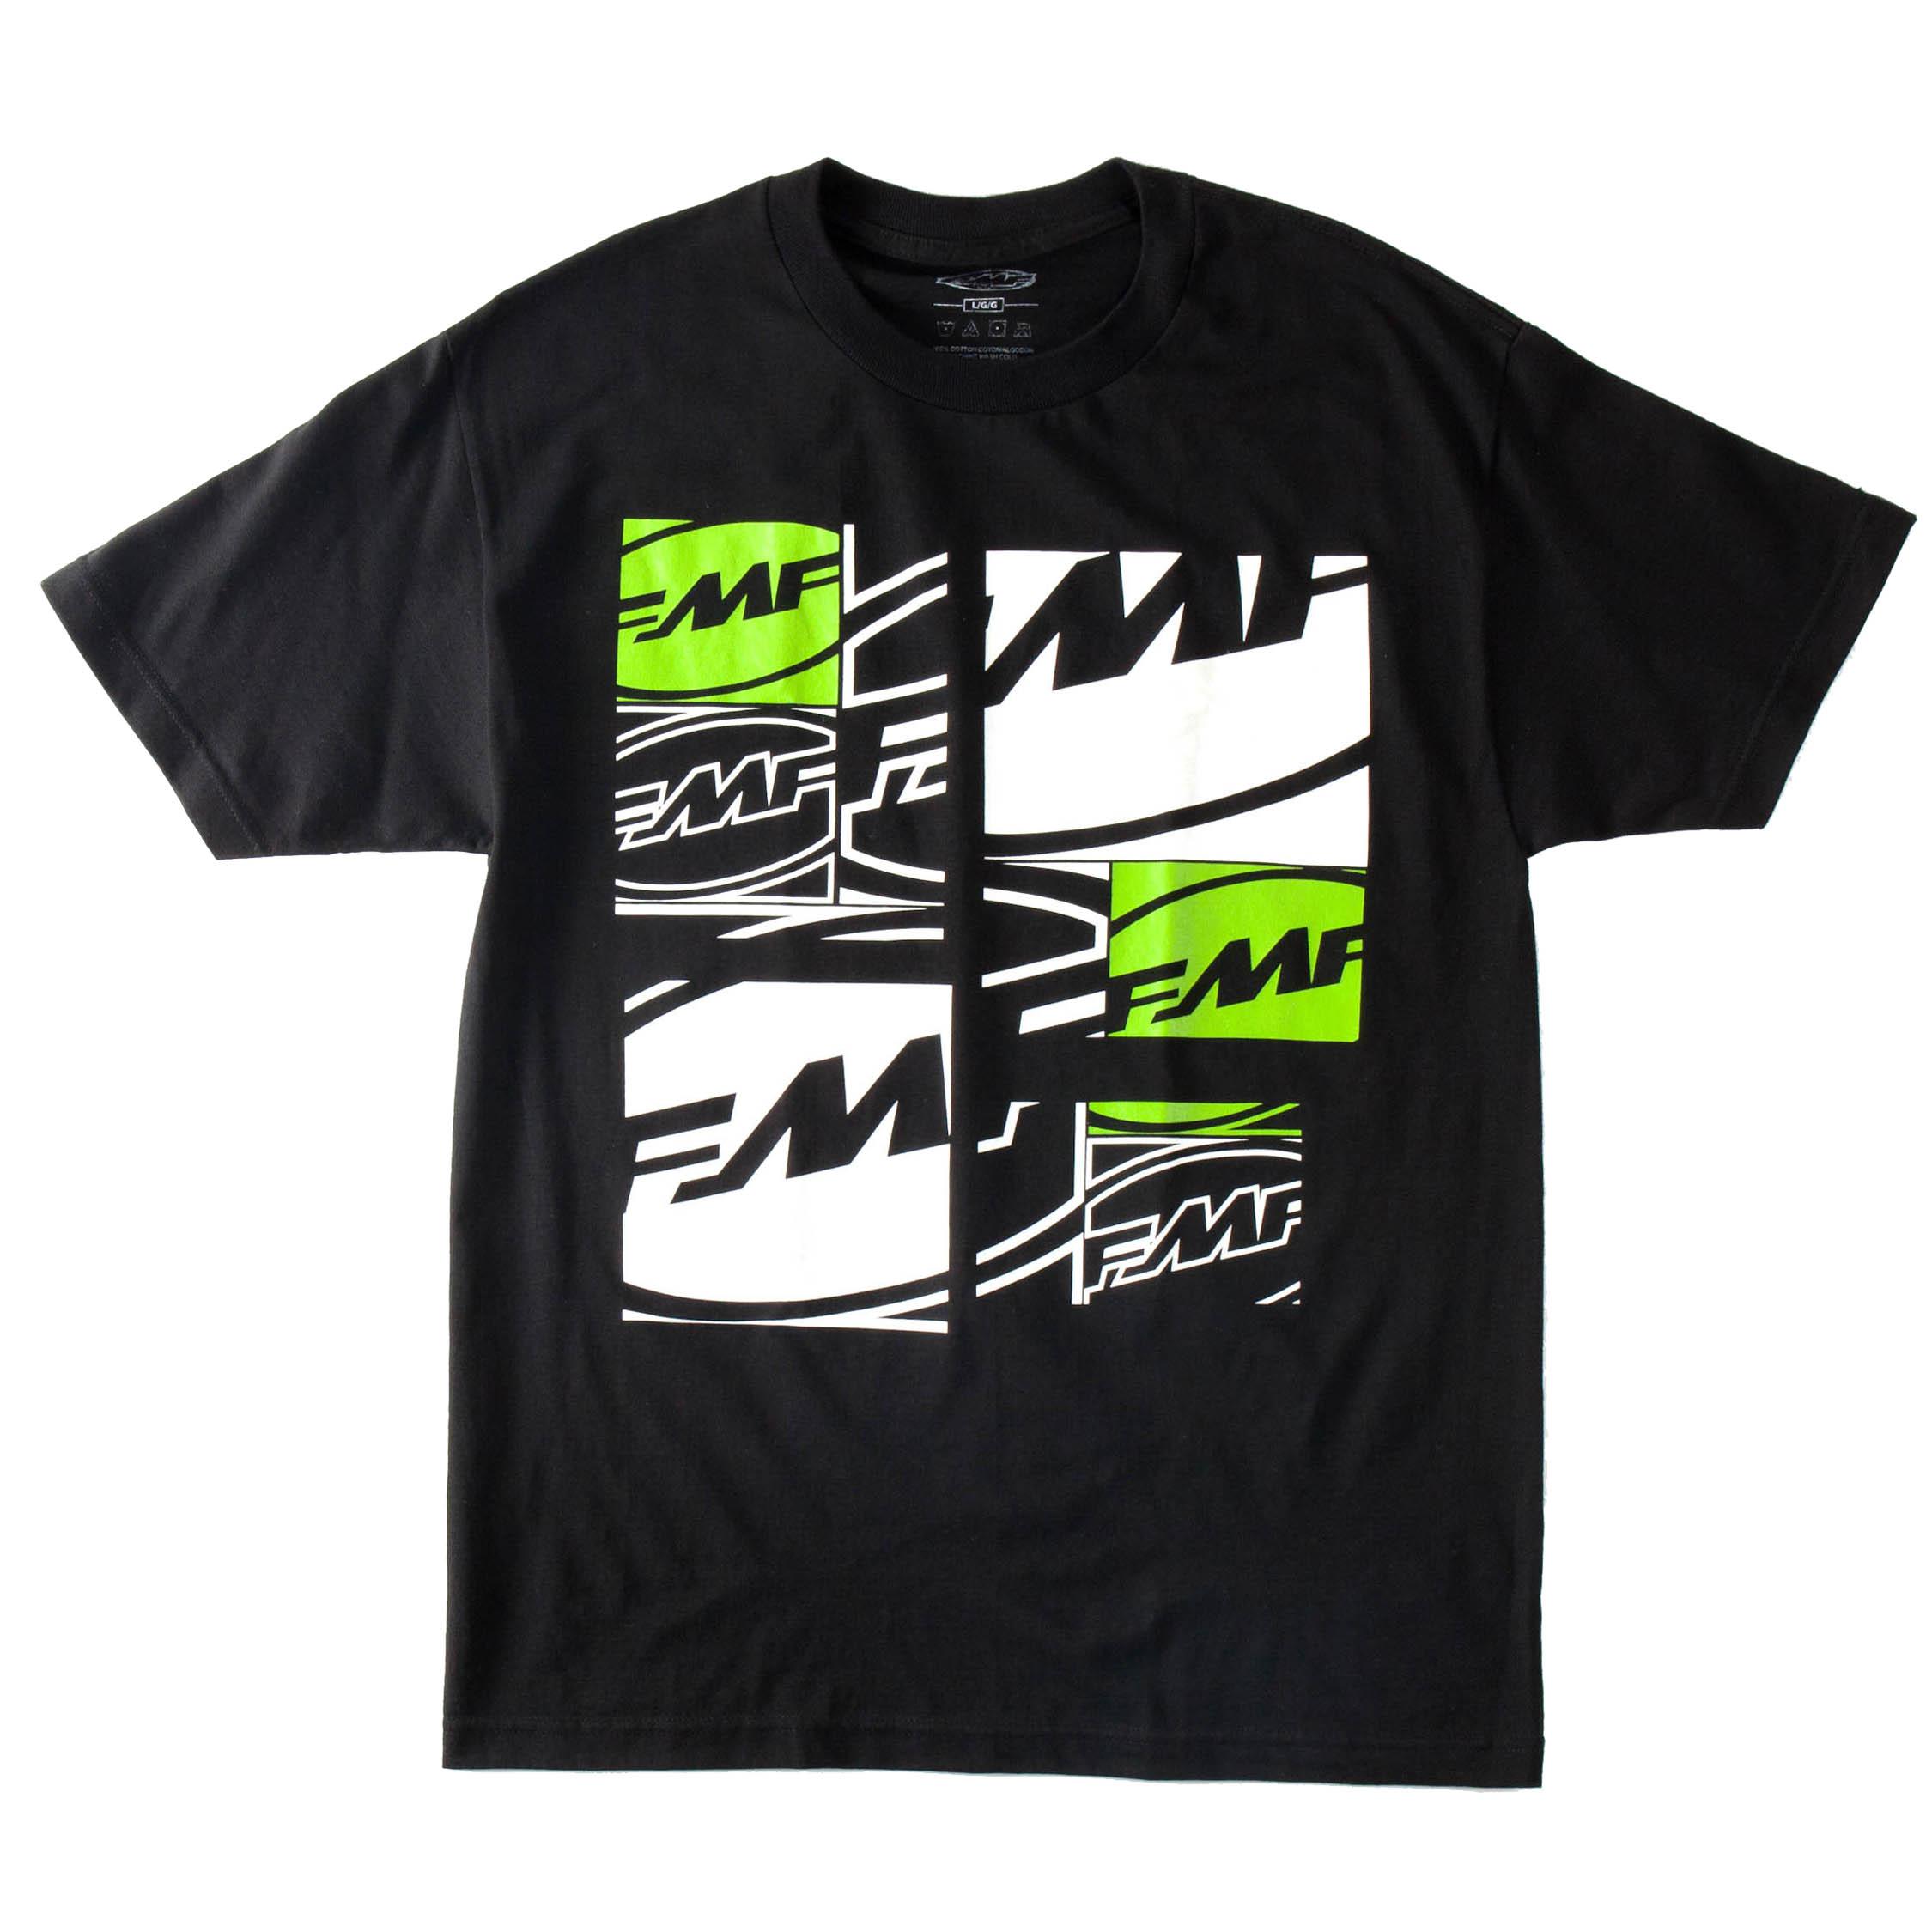 Fmf apparel block and lock t-shirt motorcycle shirts